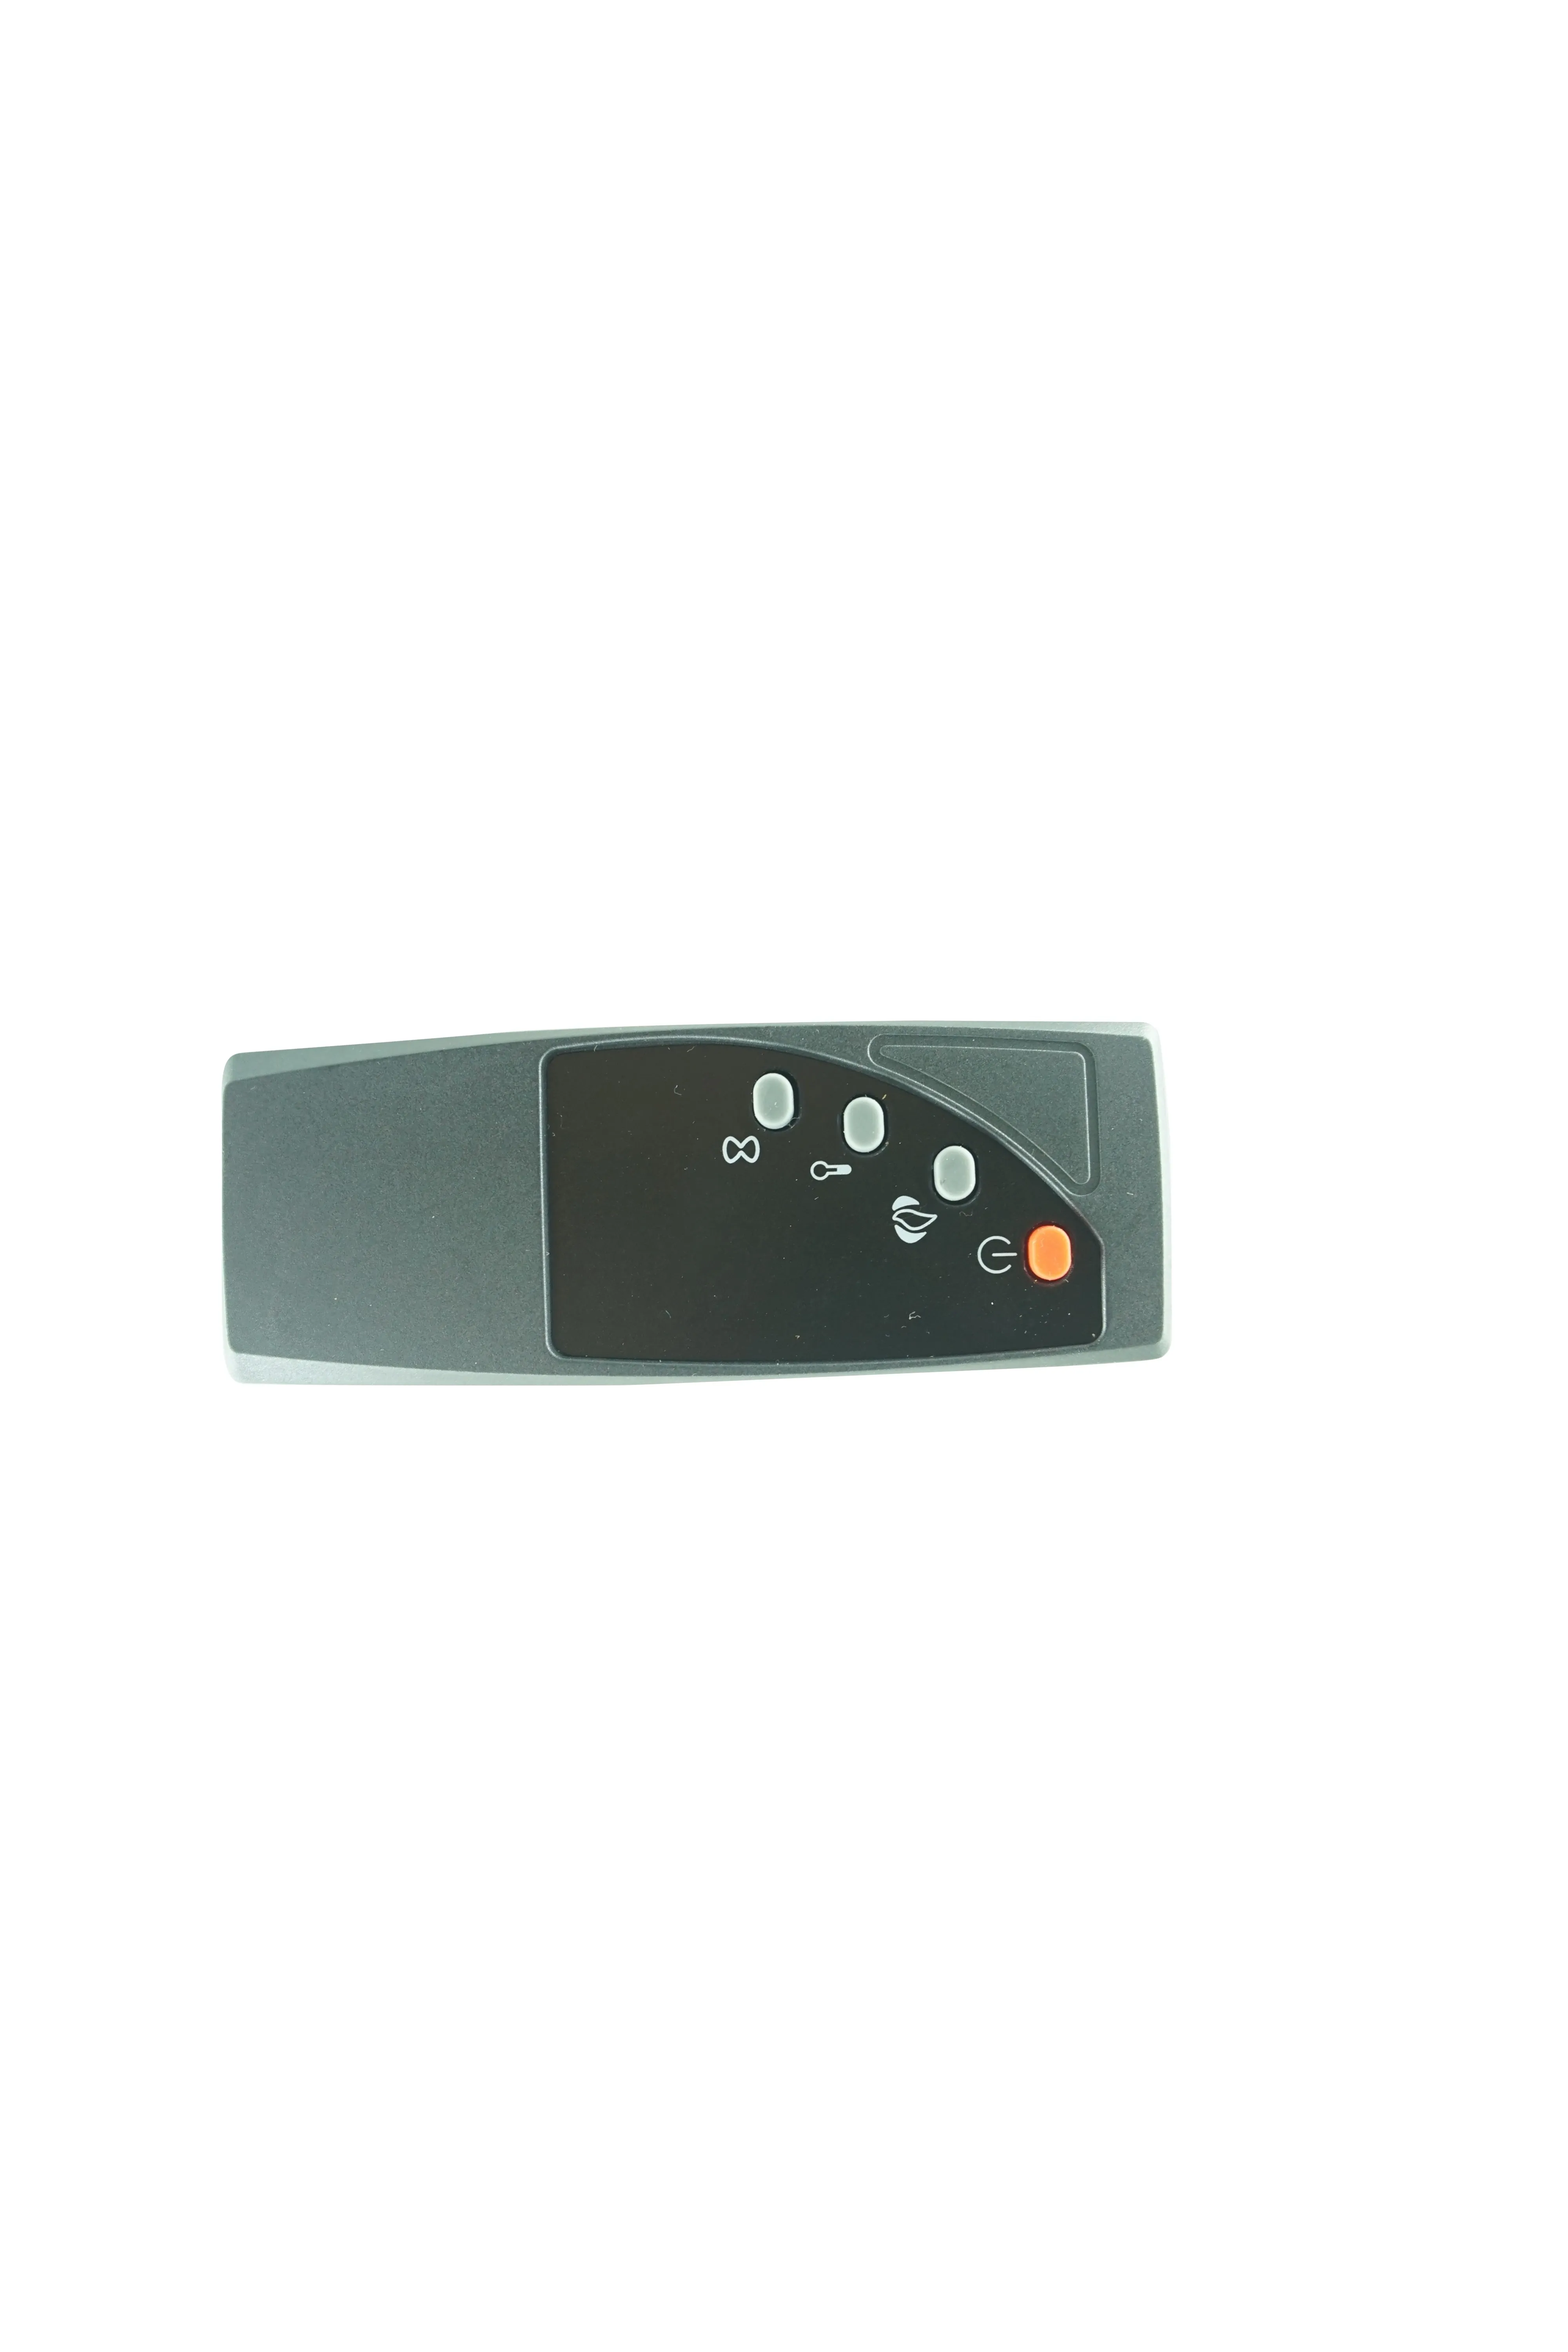 Remote Control For Twin Star Duraflame CFI-5010-02 CFI-5010-03 CFI-5010-04 CFI-550-42 CFI-550-44 DFI-5010 3D Electric Fireplace Heater